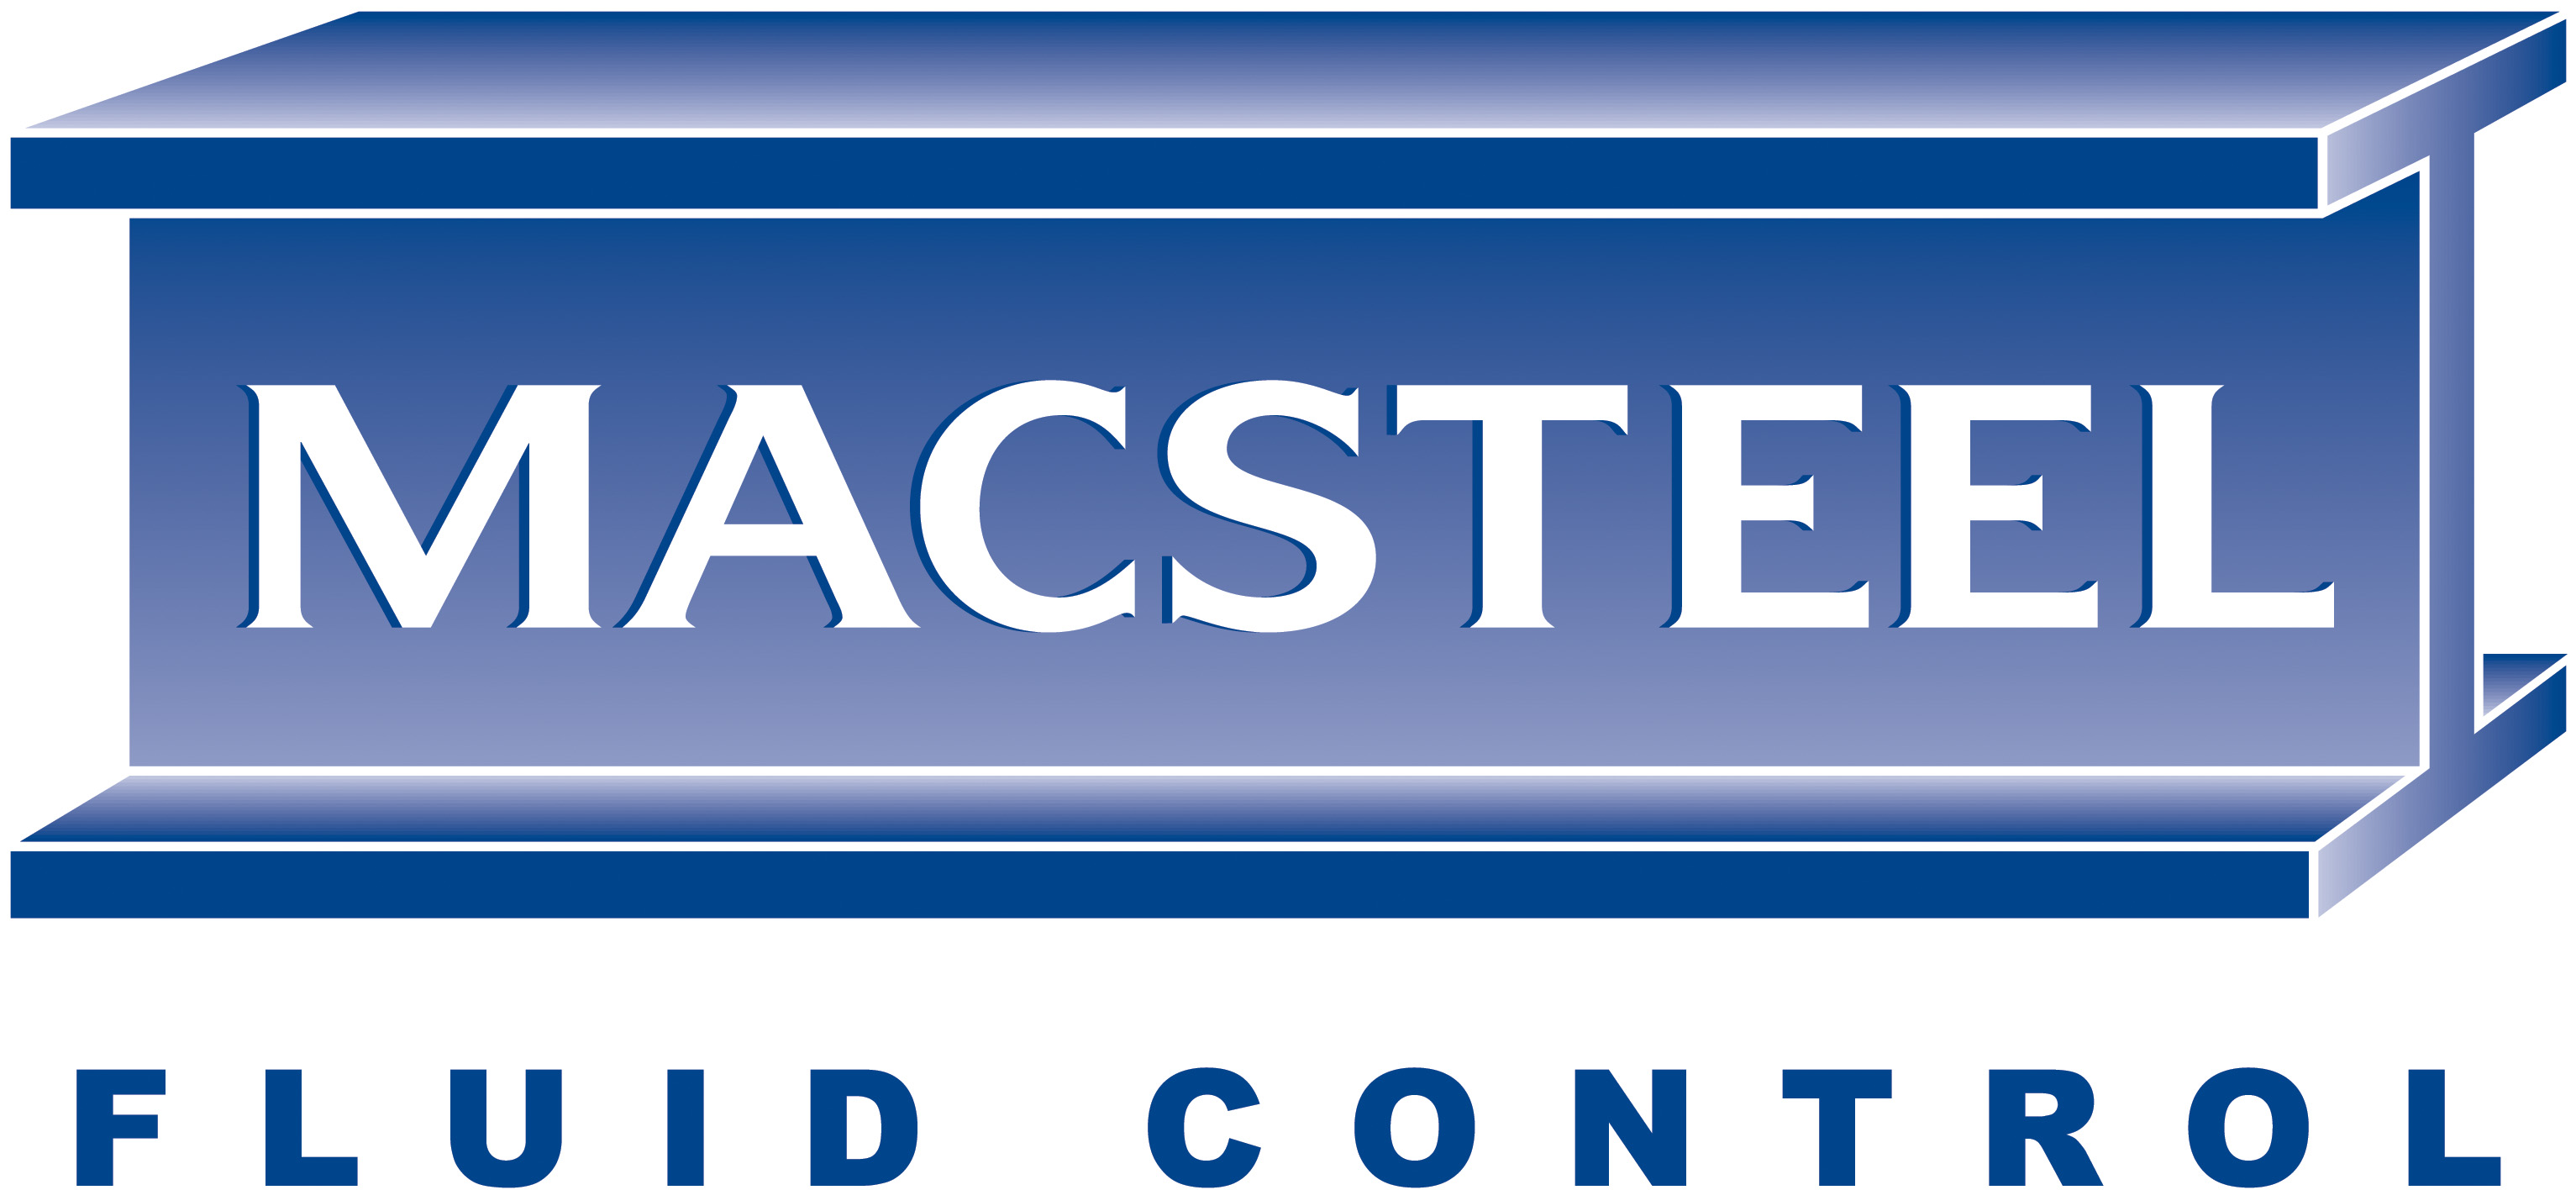 Macsteel Fluid Control - Cape Town logo